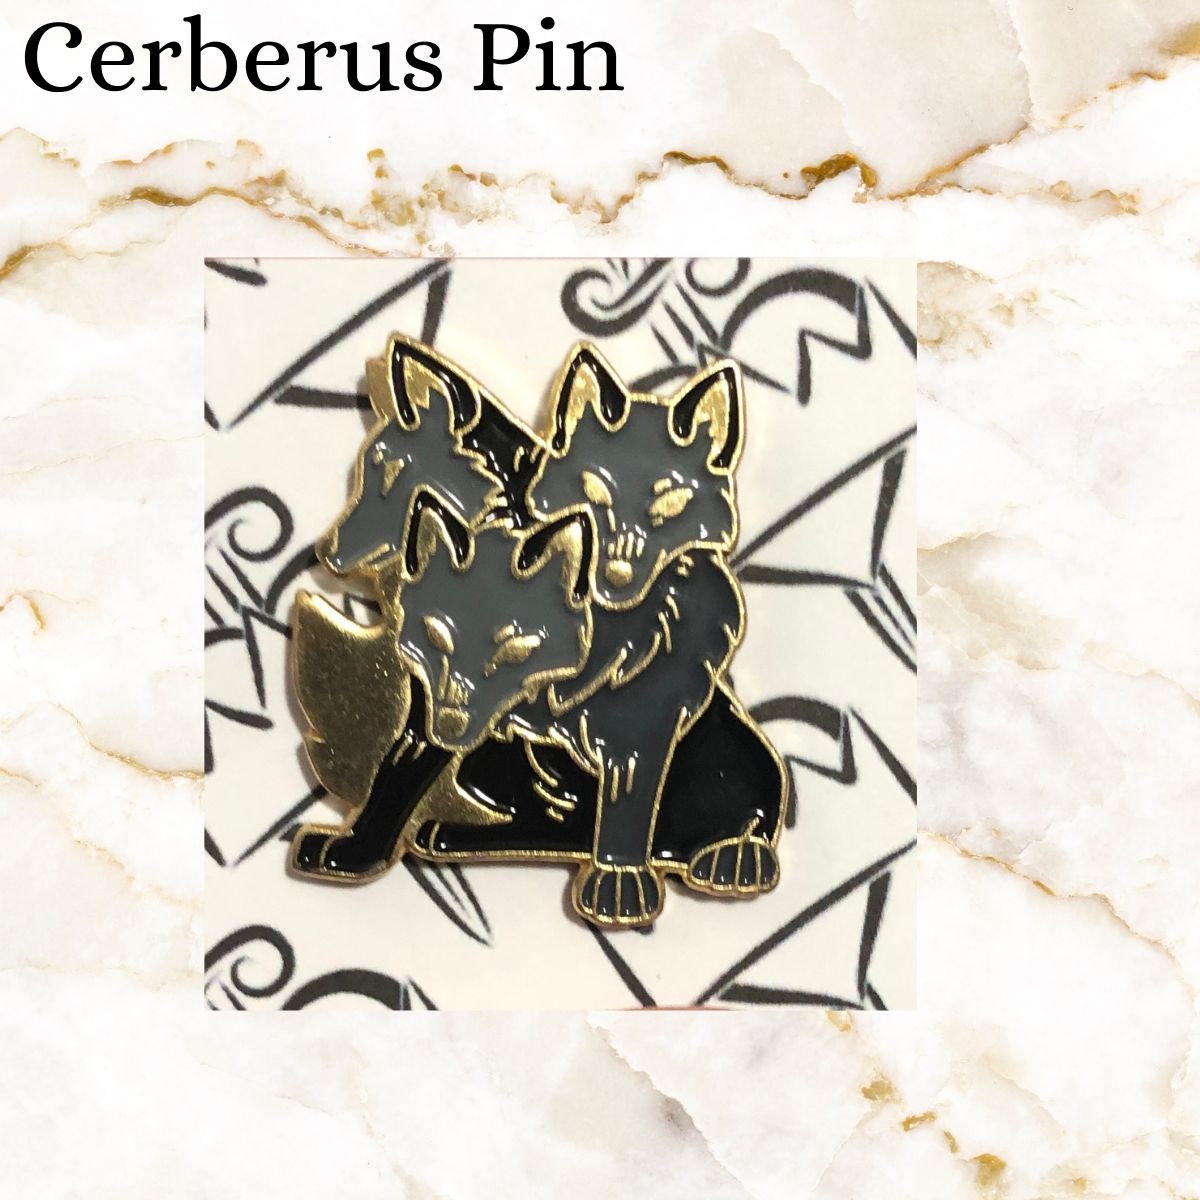 Book pin - grey and black cerberus - three headed dog